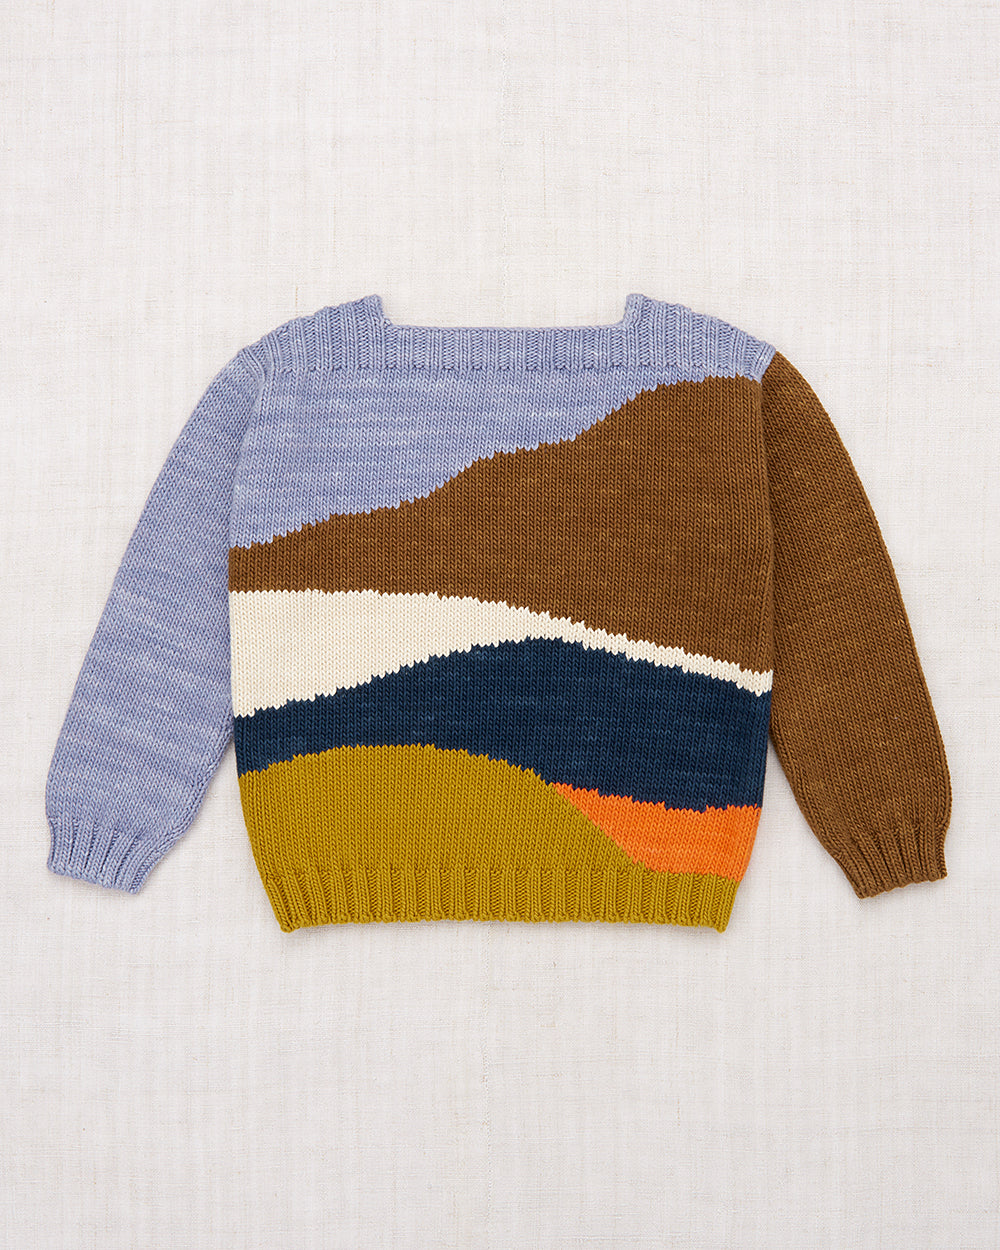 Landscape Sweater